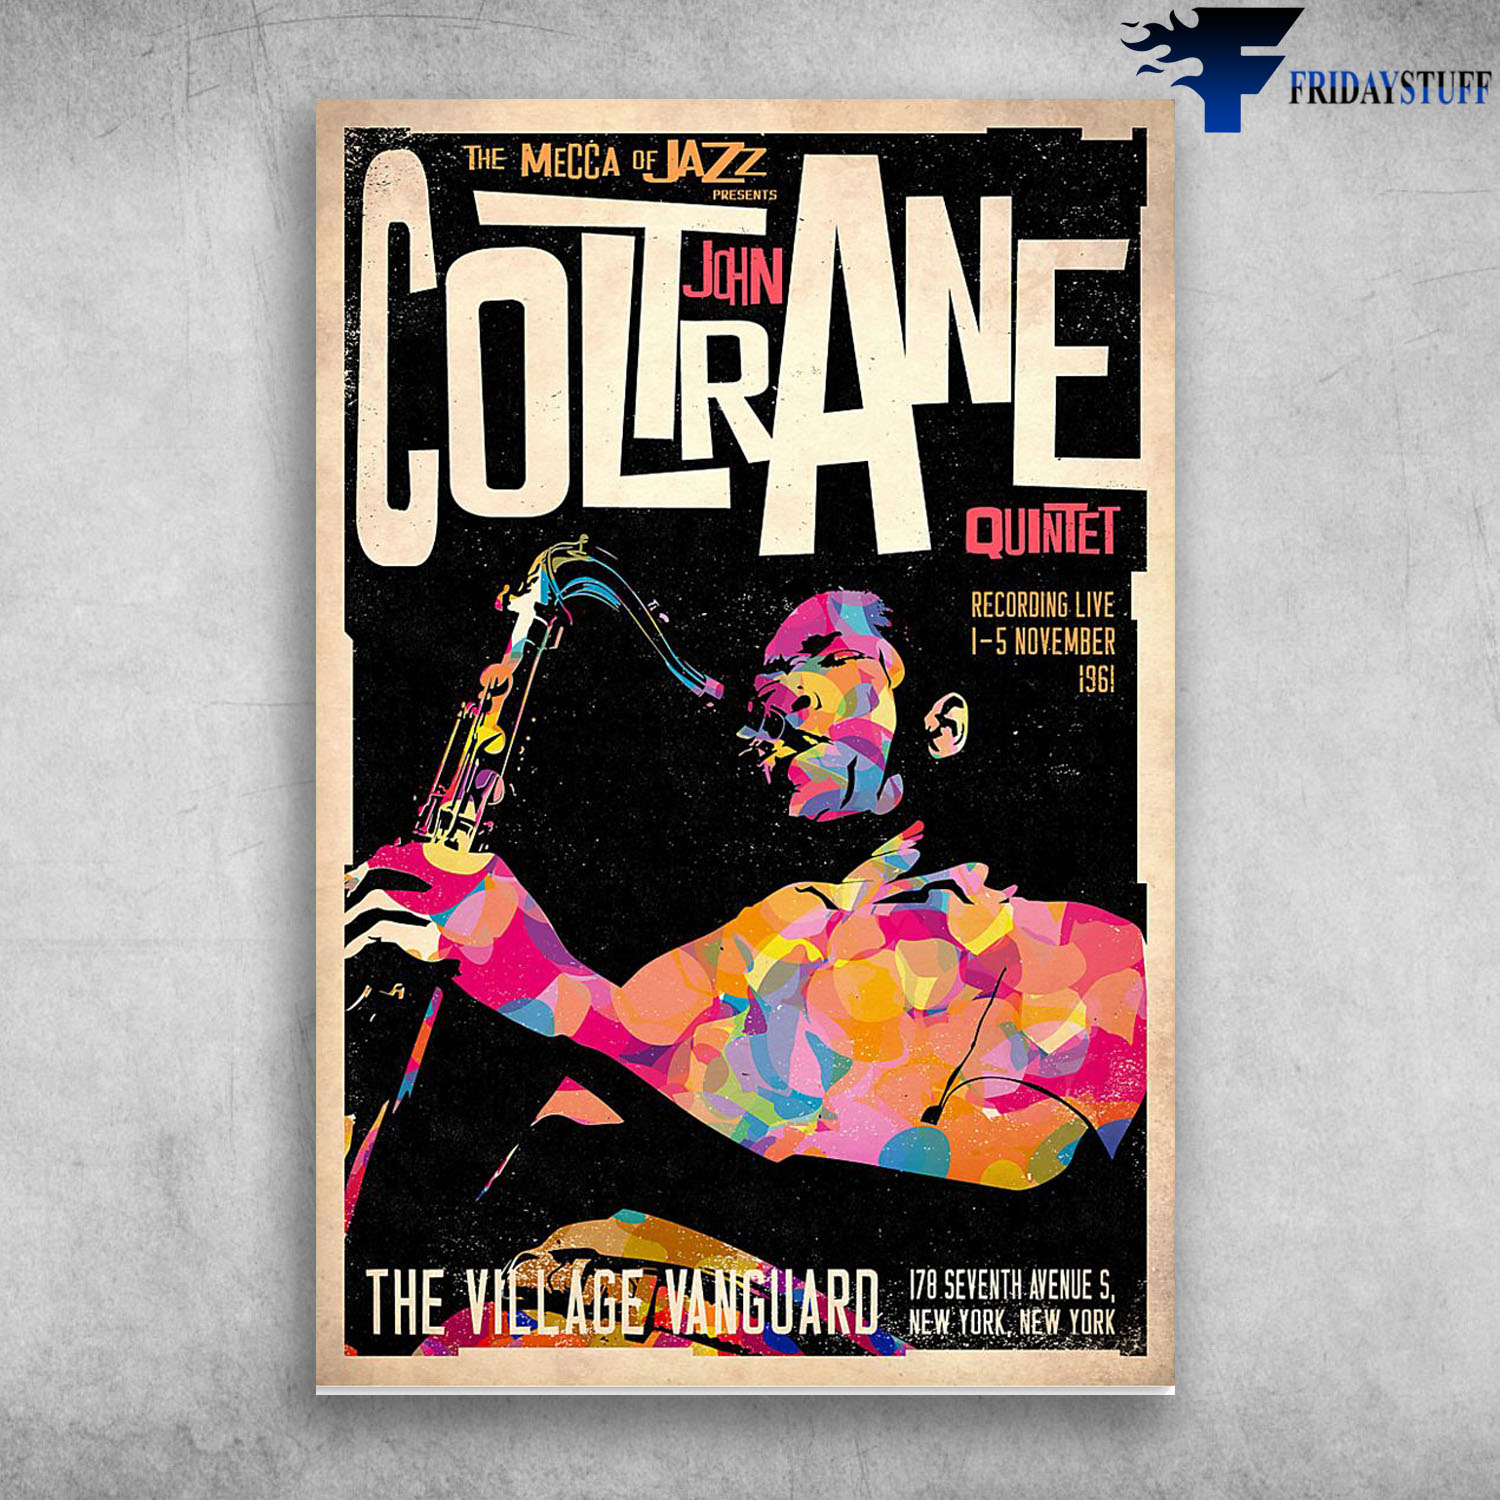 The Mecca Of Jazz Presents John Coltrane Quintet Recording Live 1 5 November 1961